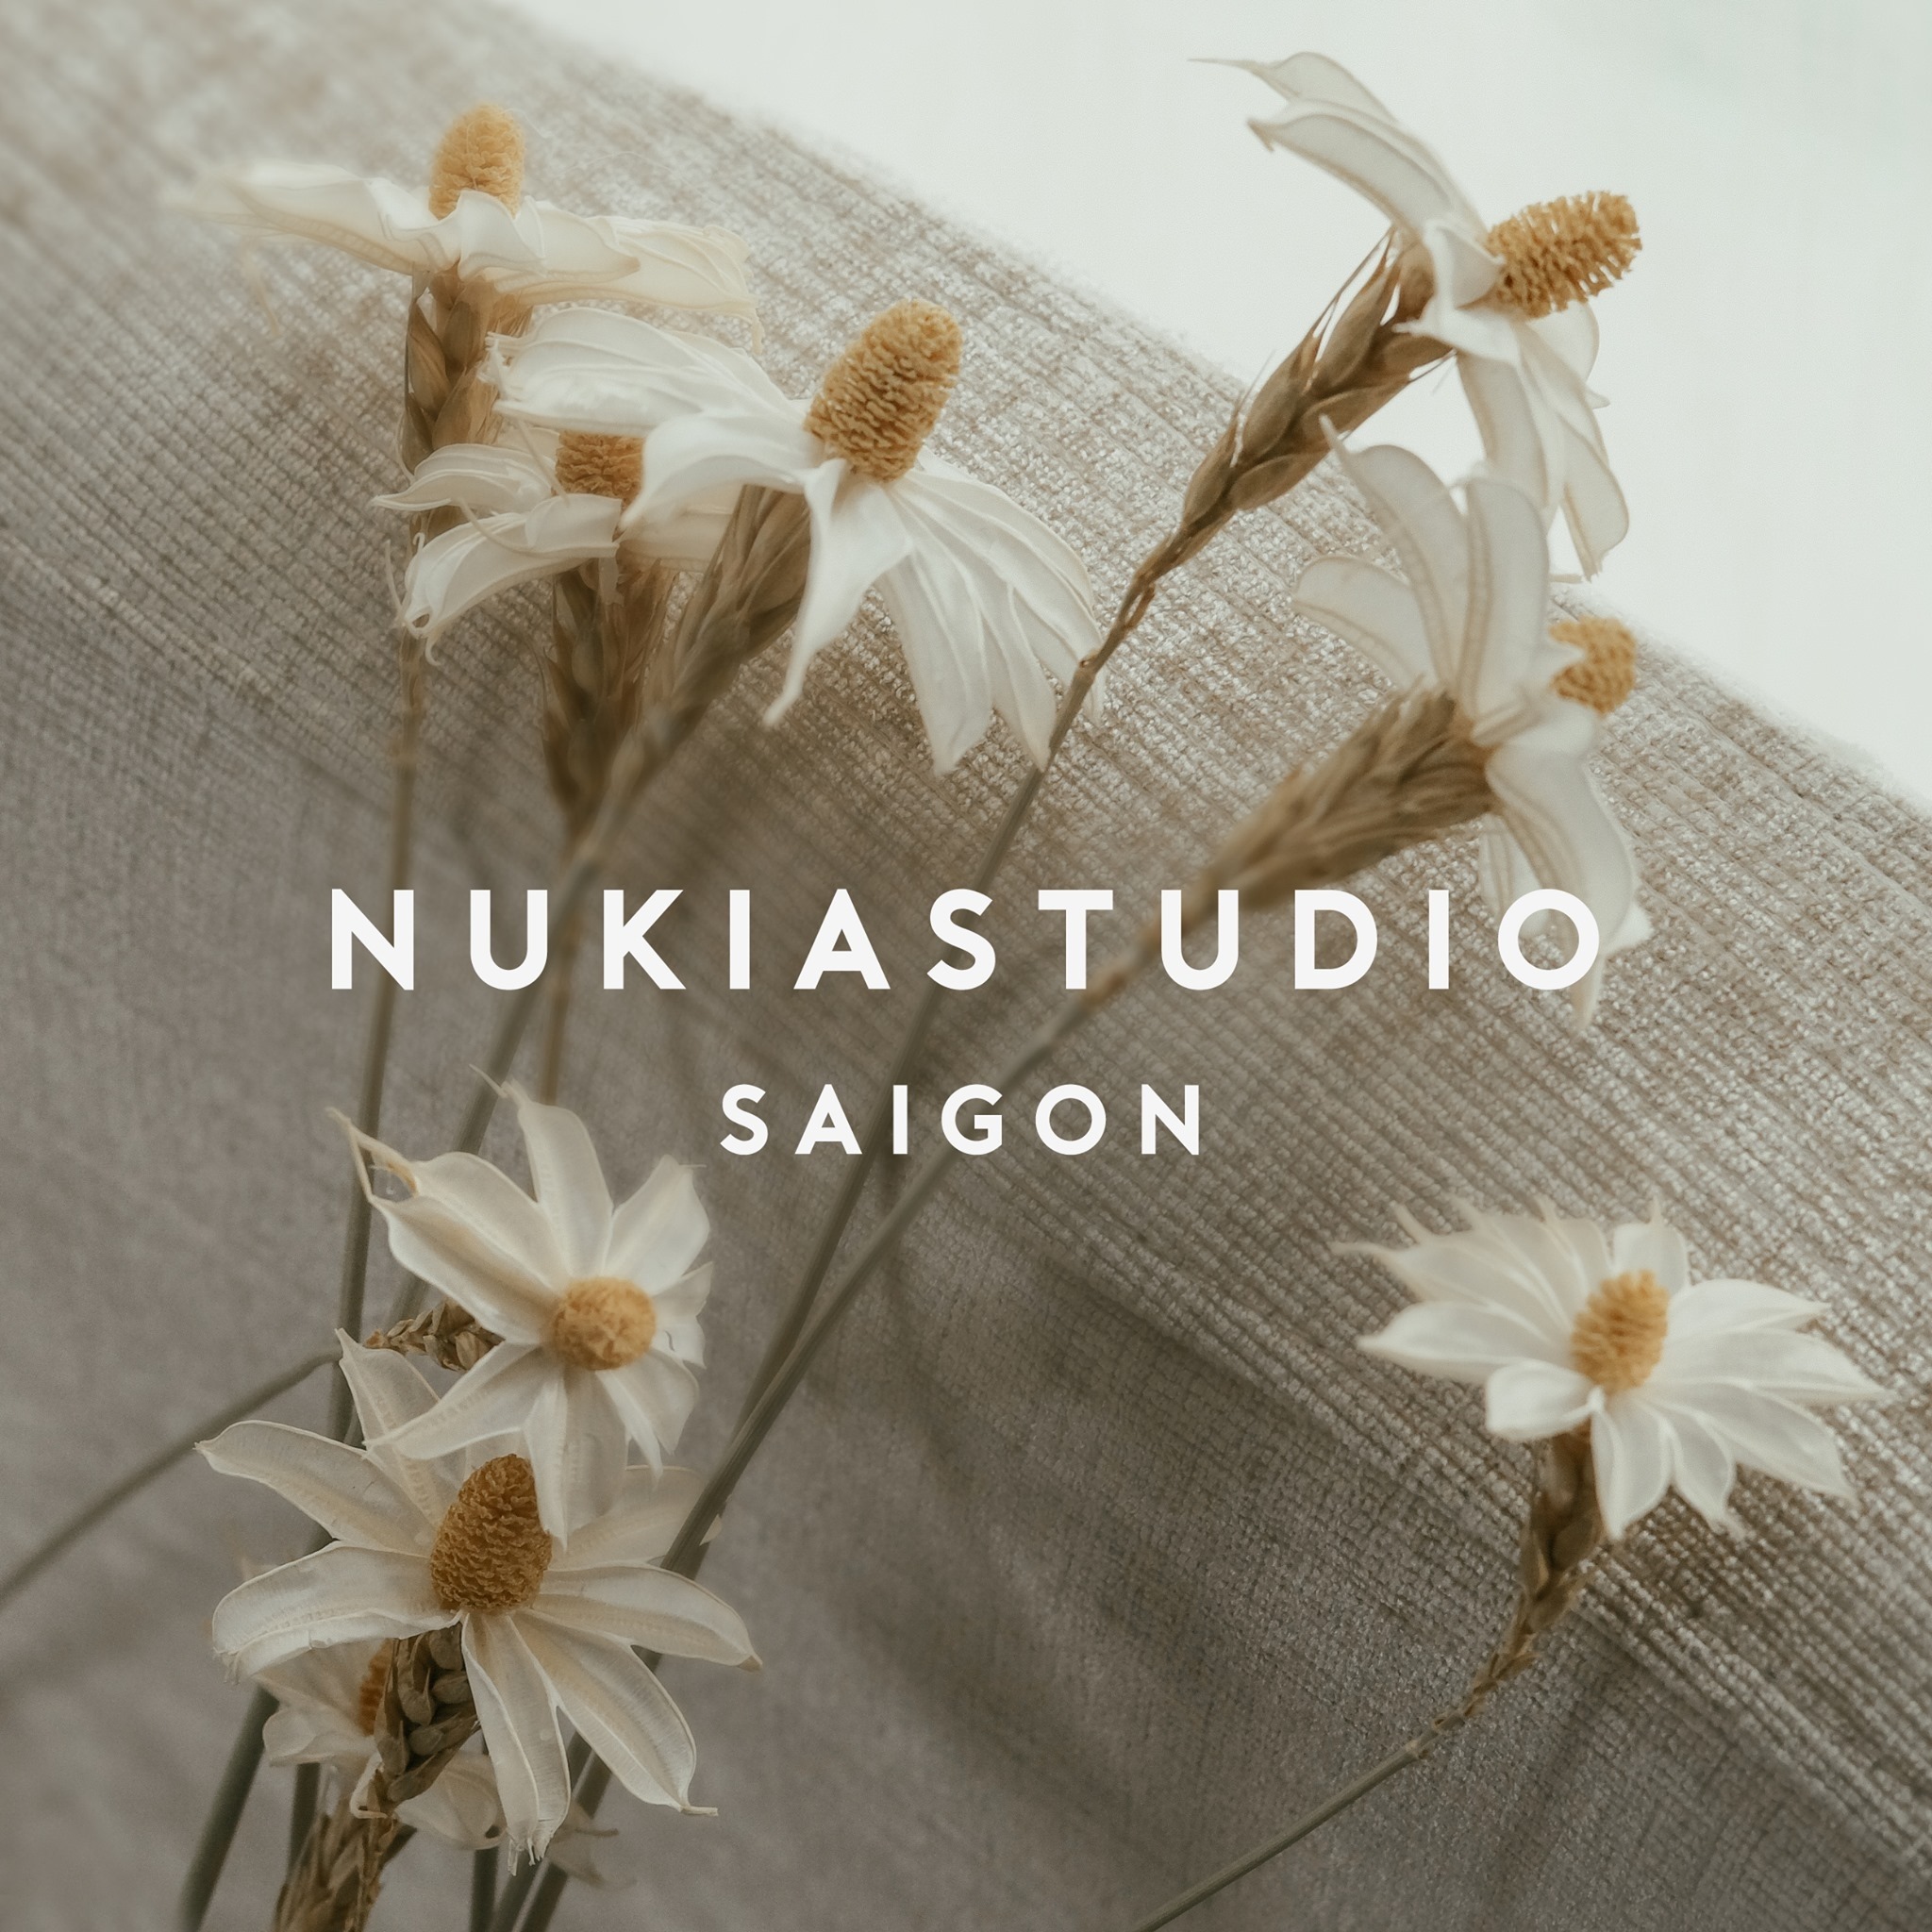 NukiA Sudio & Design